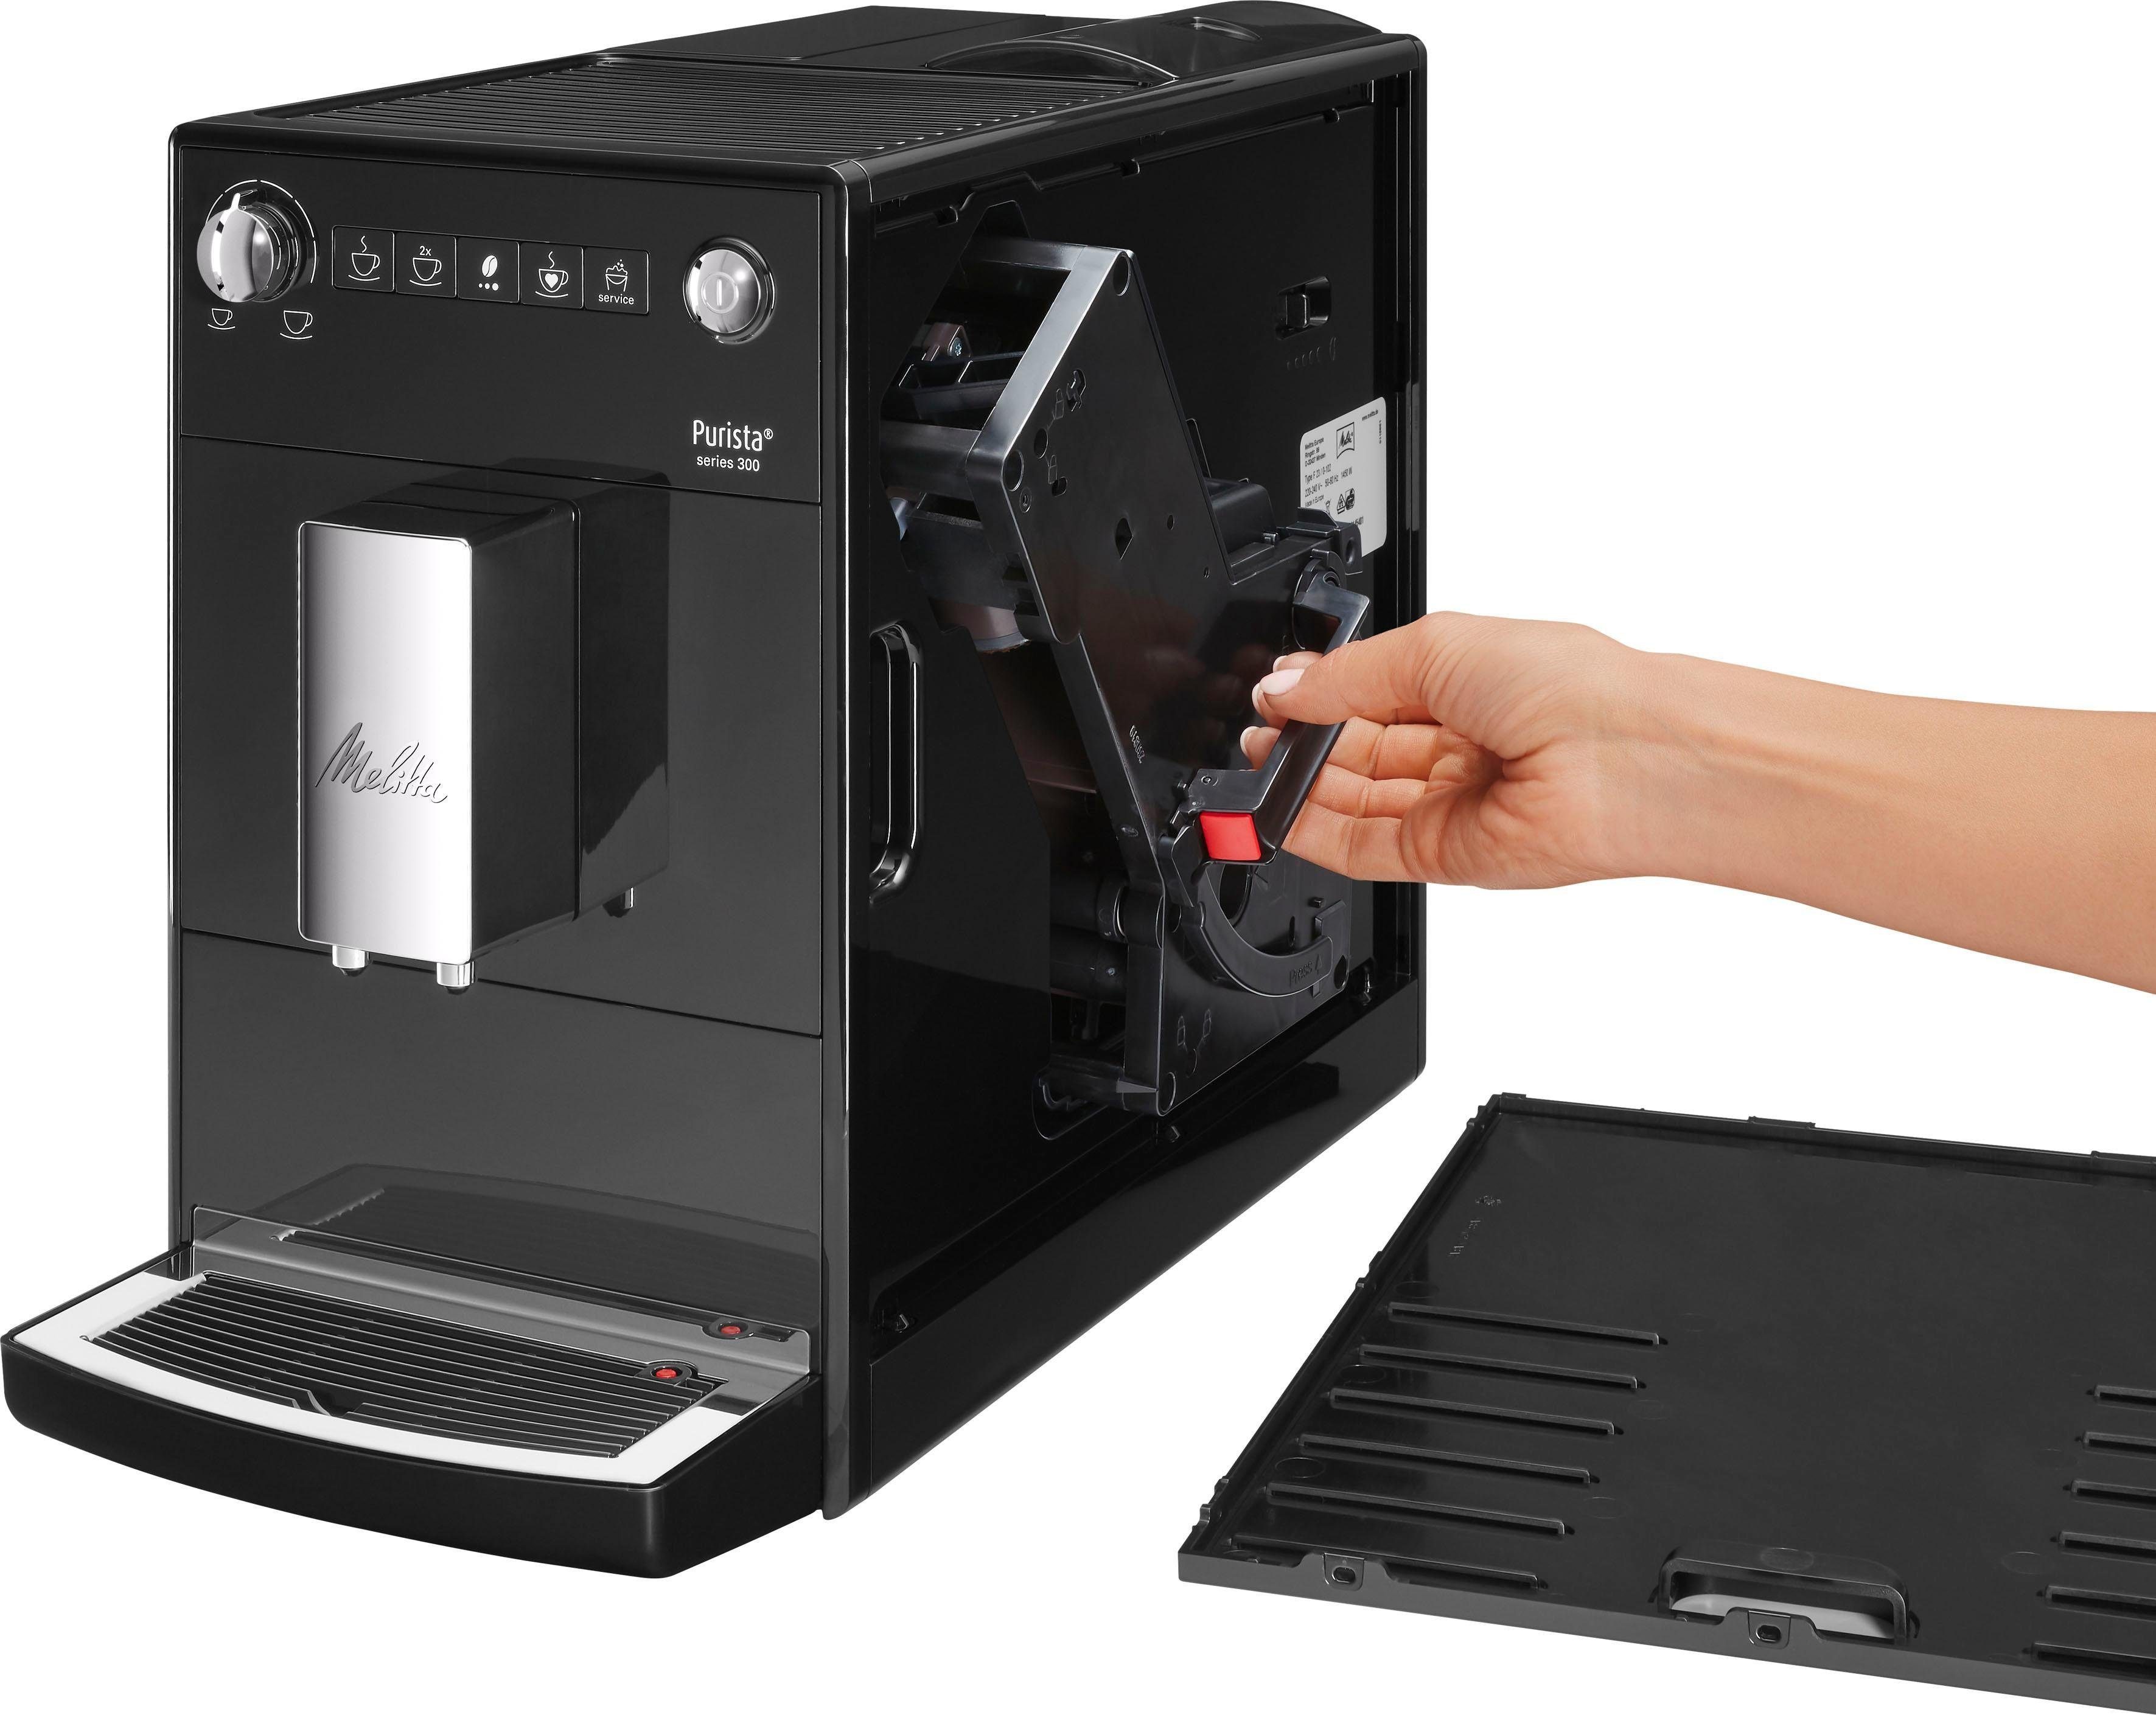 F230-102, Melitta leise Purista® extra Lieblingskaffee-Funktion, schwarz, & Kaffeevollautomat kompakt